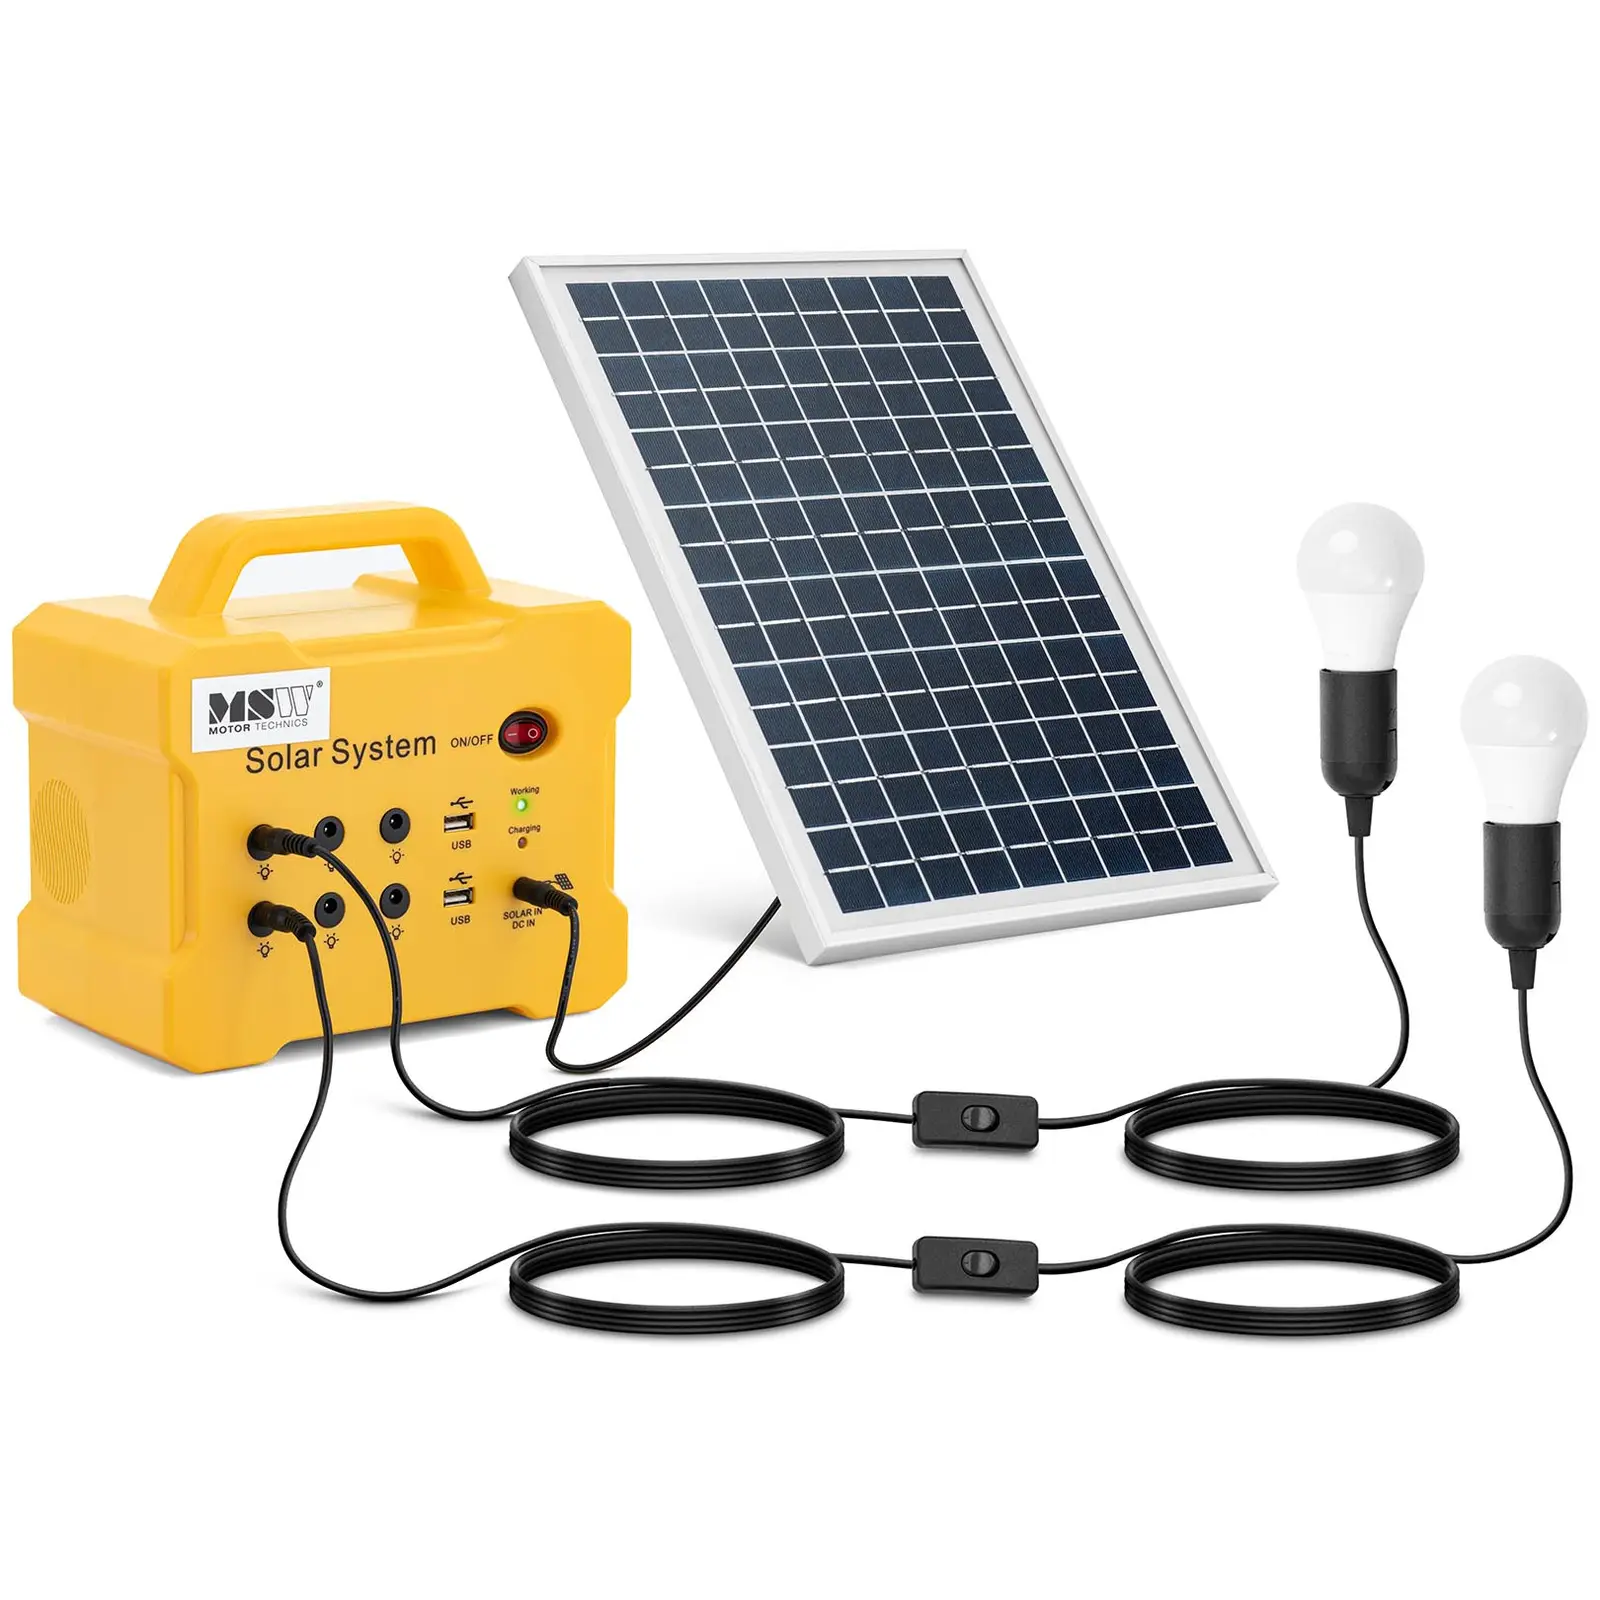 Powerstation mit Solarpanel und 2 LED-Lampen -  10 W - 12 V